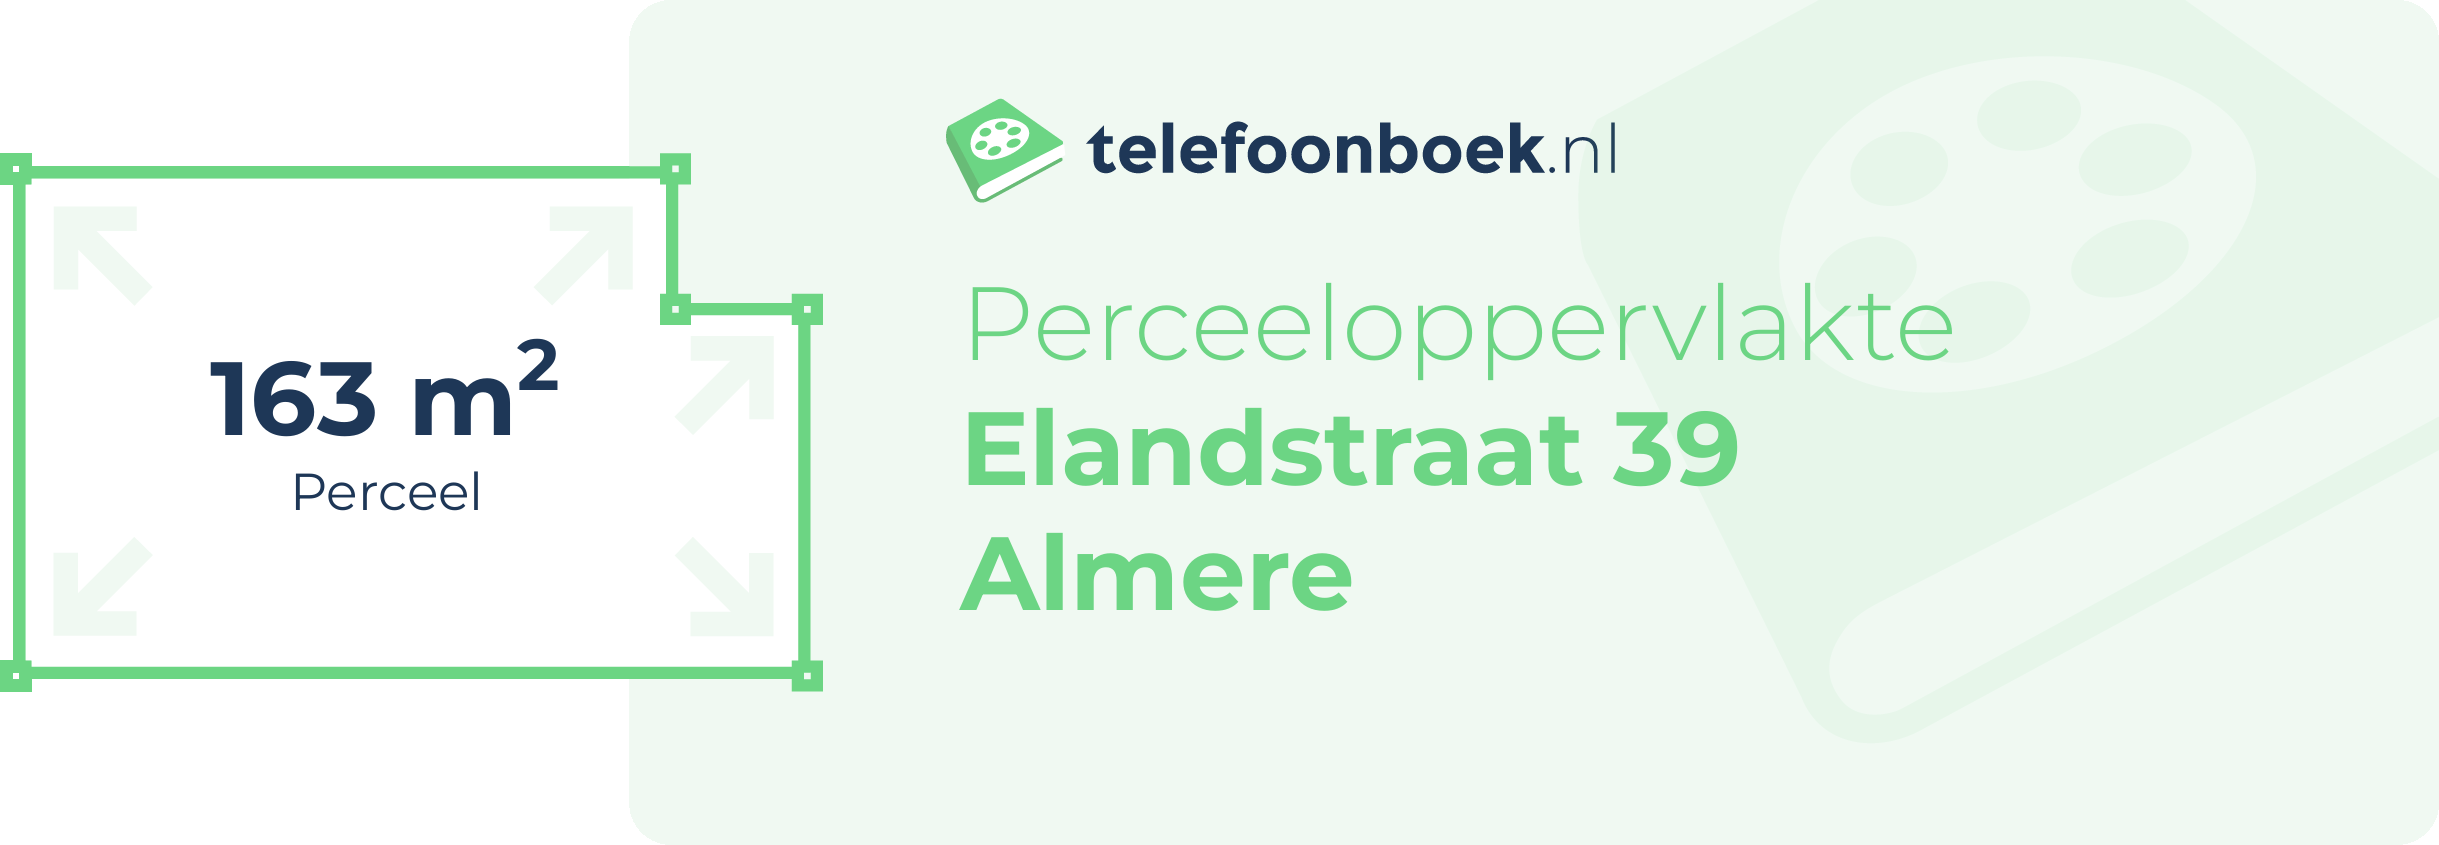 Perceeloppervlakte Elandstraat 39 Almere